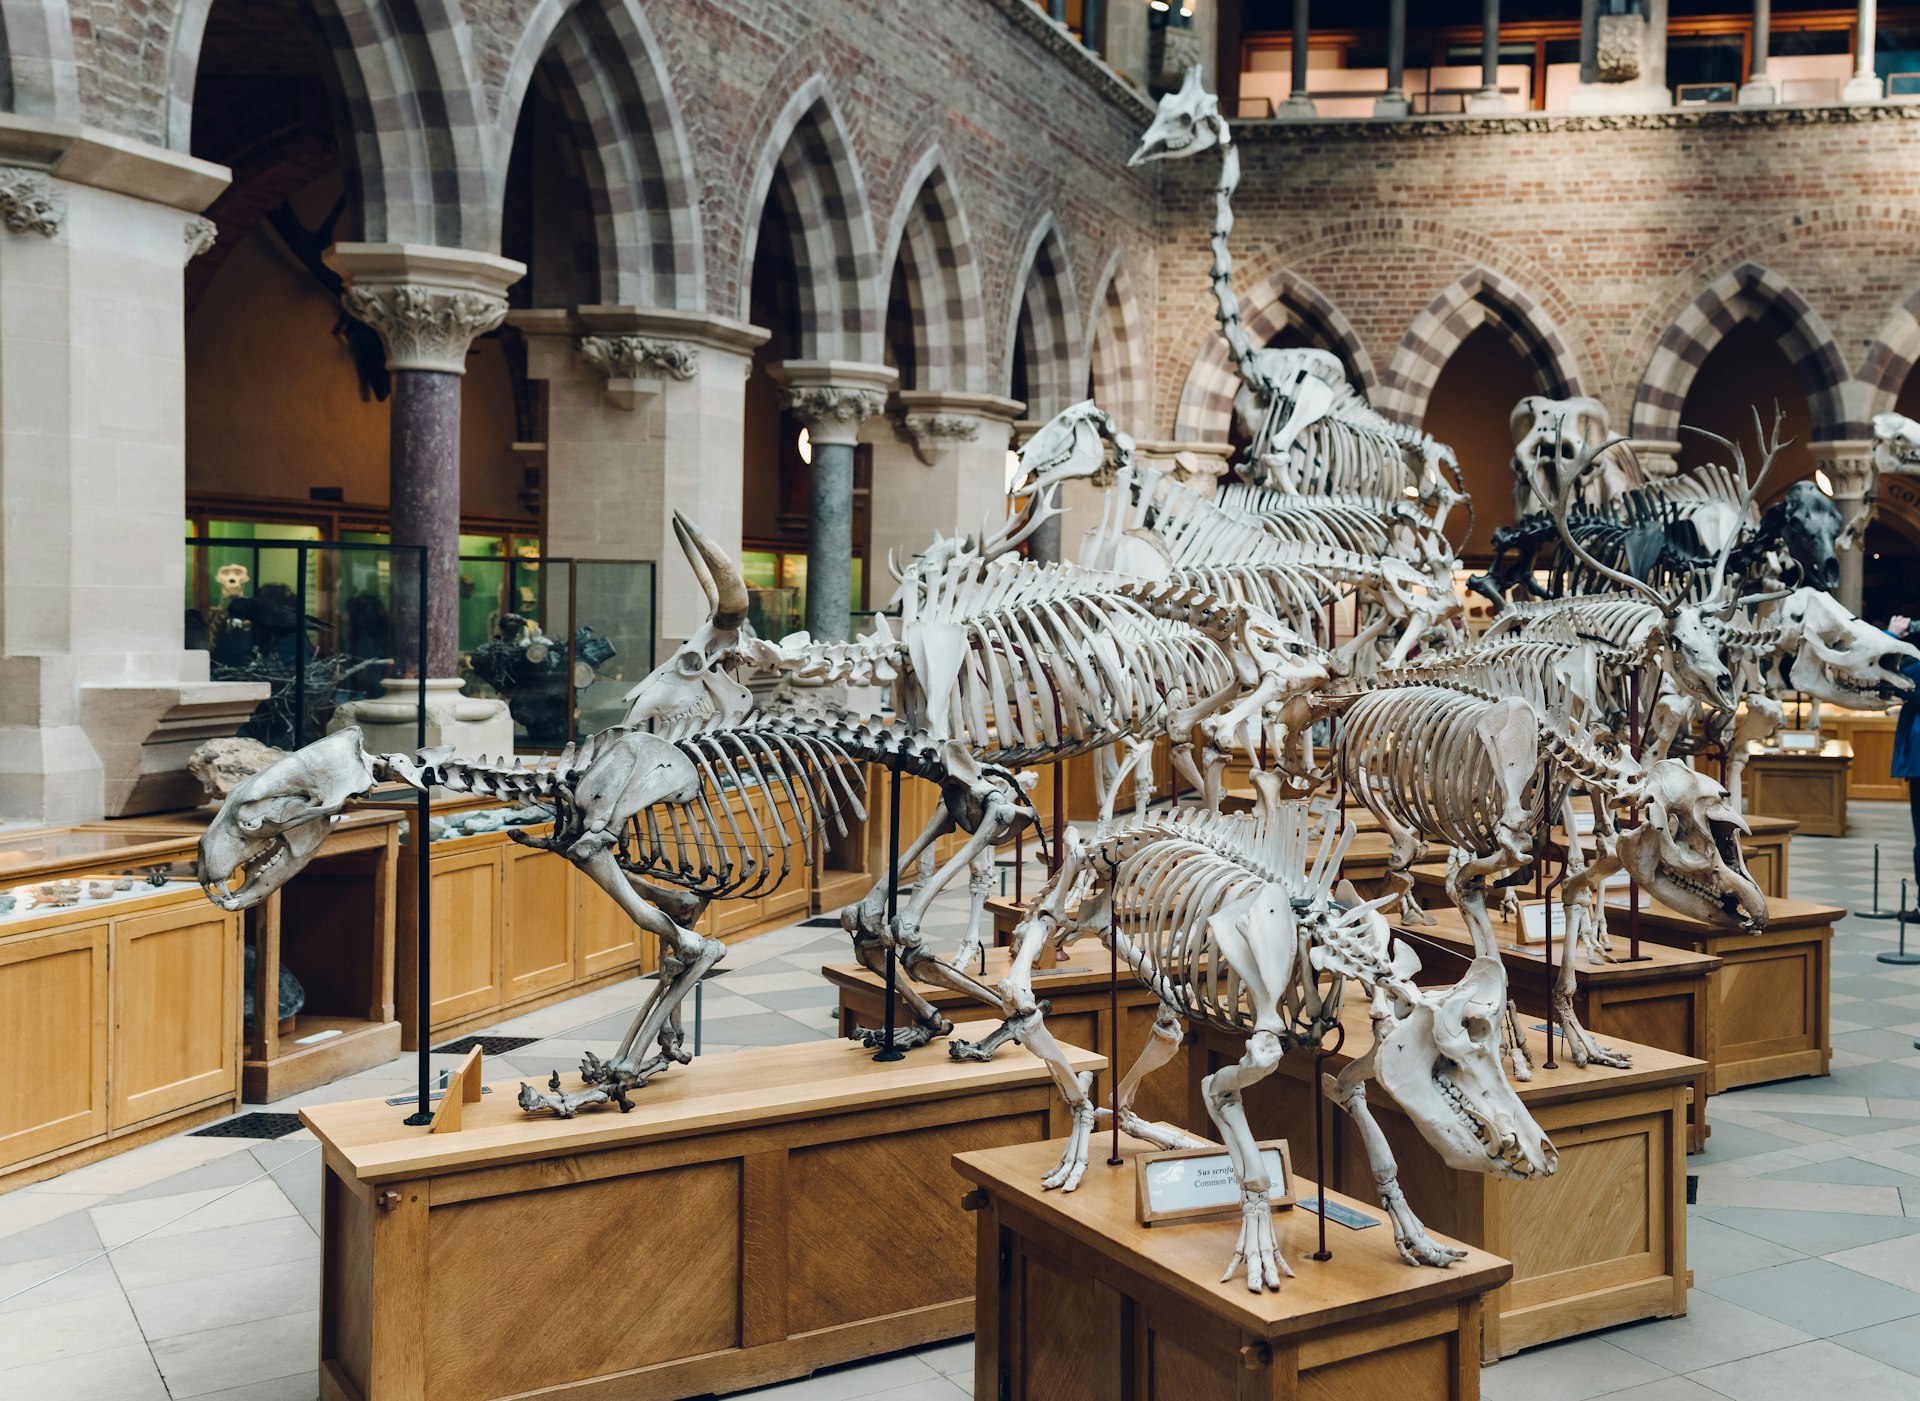 Dinosaur skeleton displays inside the Natural History Museum in Oxford.